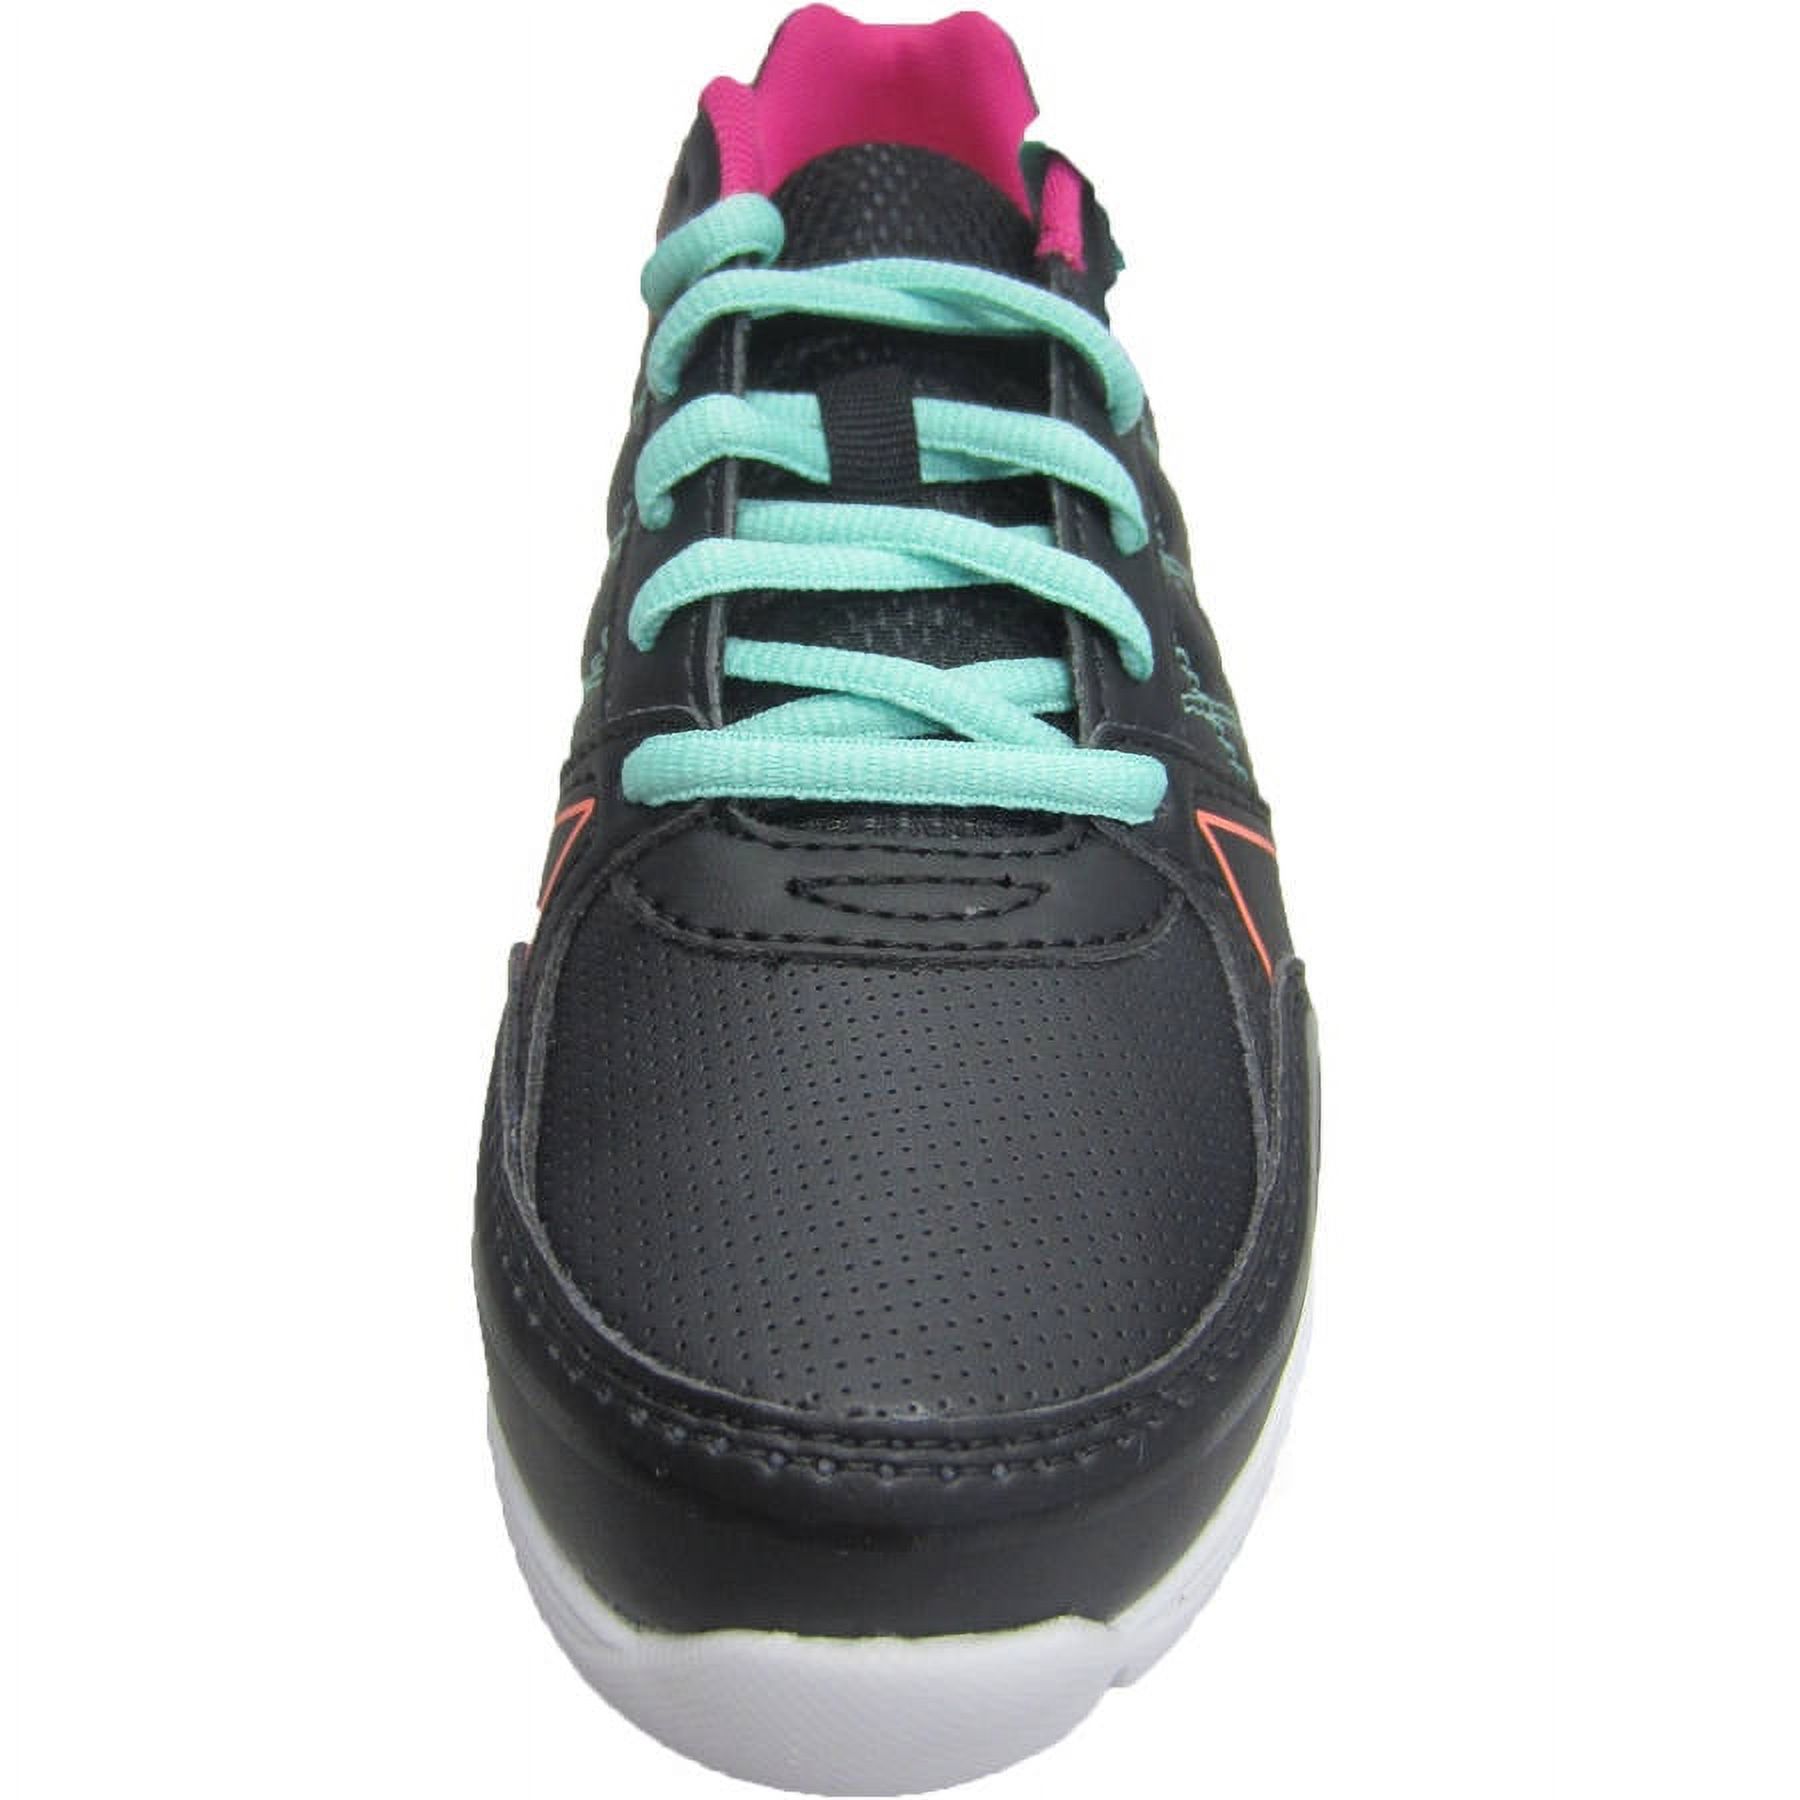 Women's Athletic Shoe - image 2 of 4